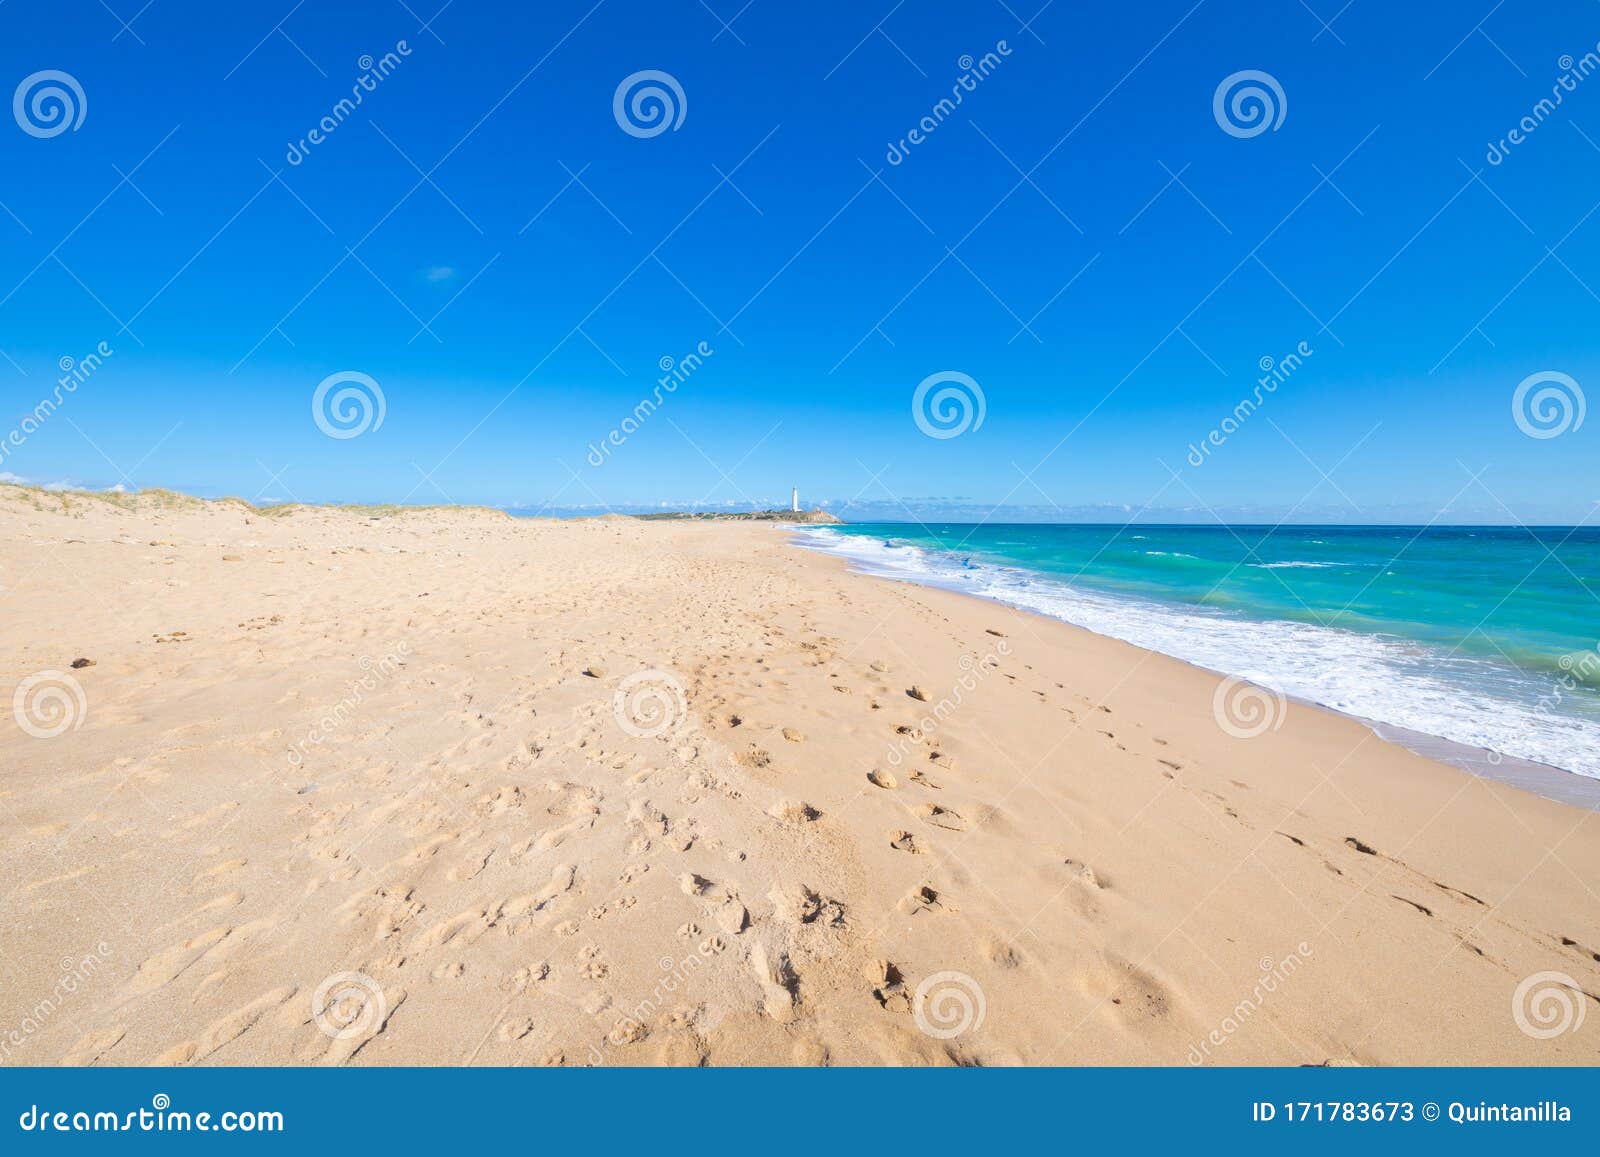 lonely beaches of zahora and trafalgar in cadiz